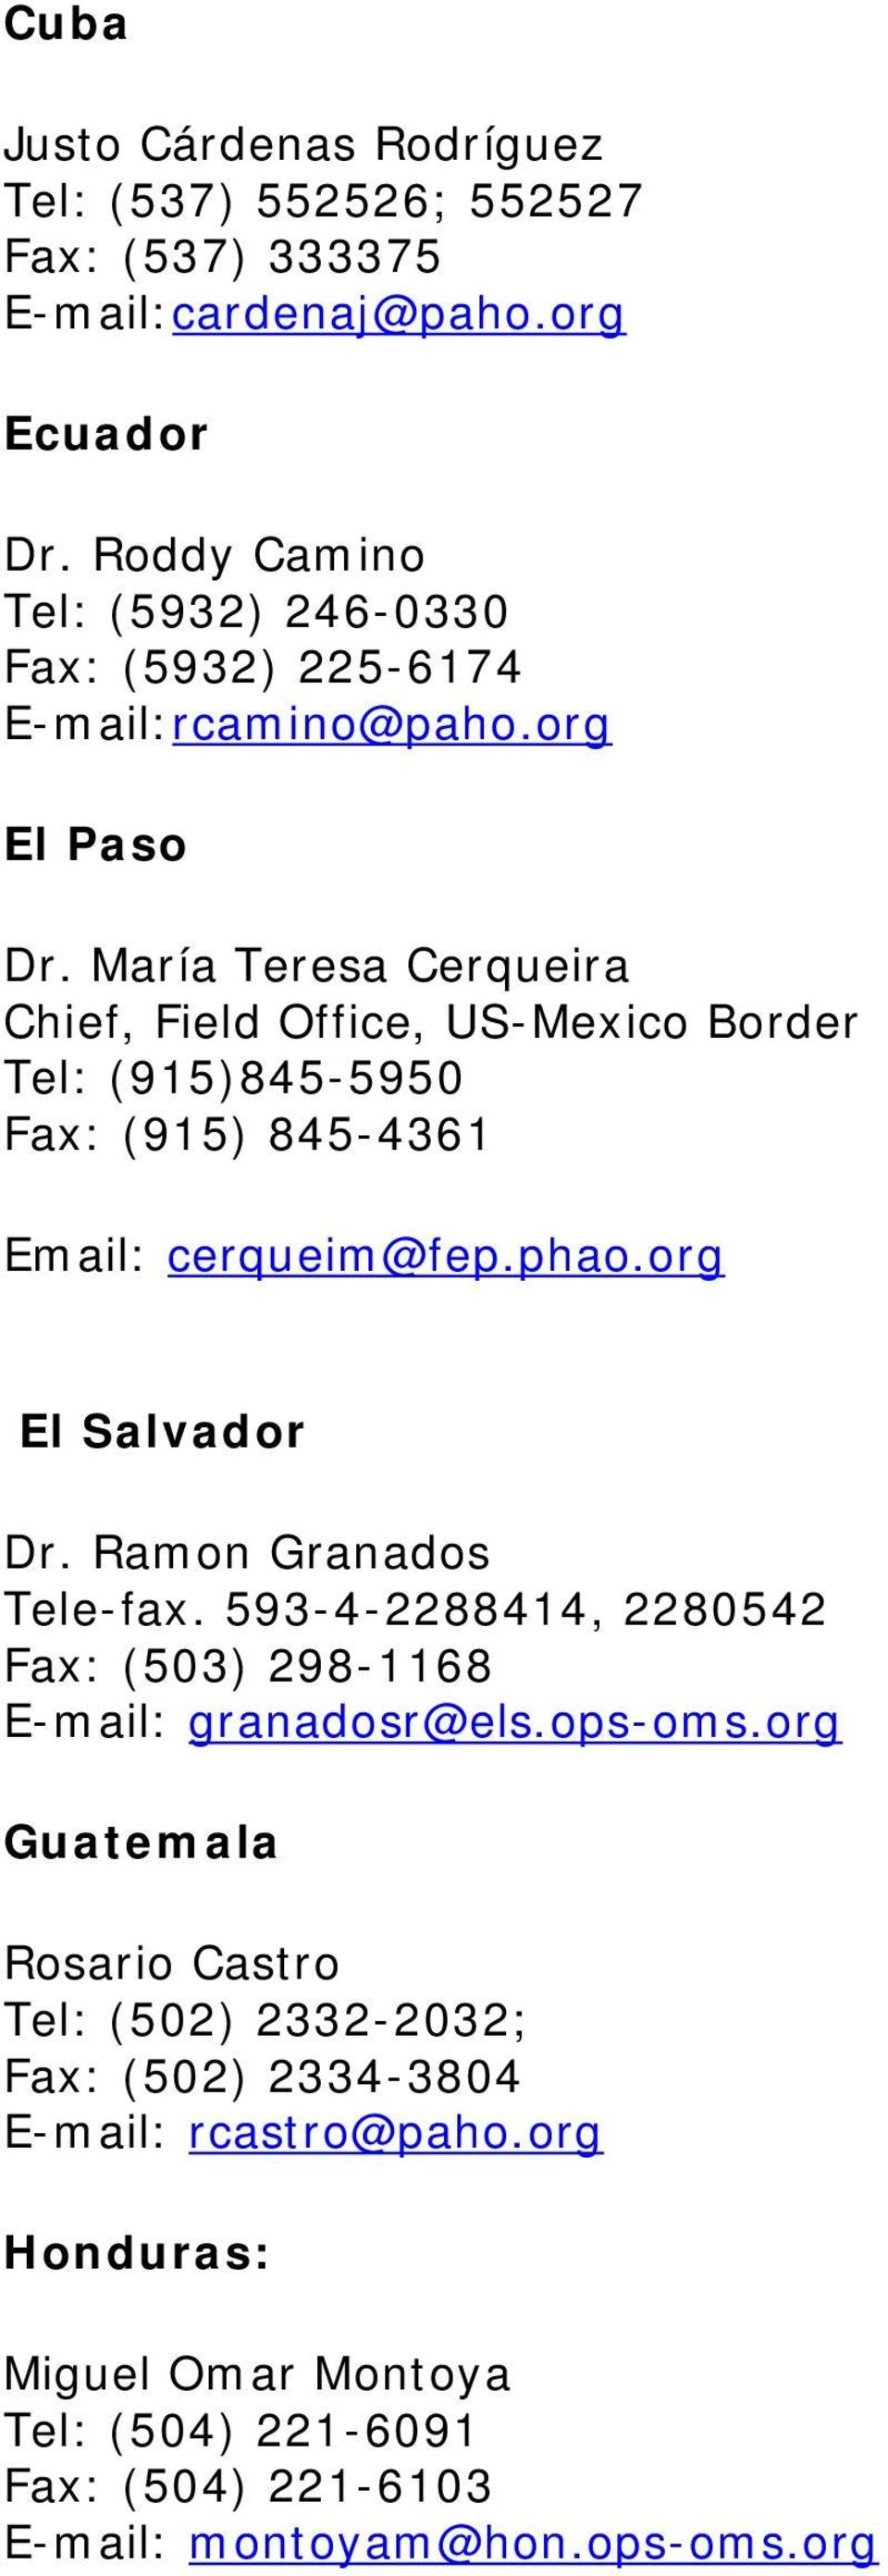 María Teresa Cerqueira Chief, Field Office, US-Mexico Border Tel: (915)845-5950 Fax: (915) 845-4361 Email: cerqueim@fep.phao.org El Salvador Dr.